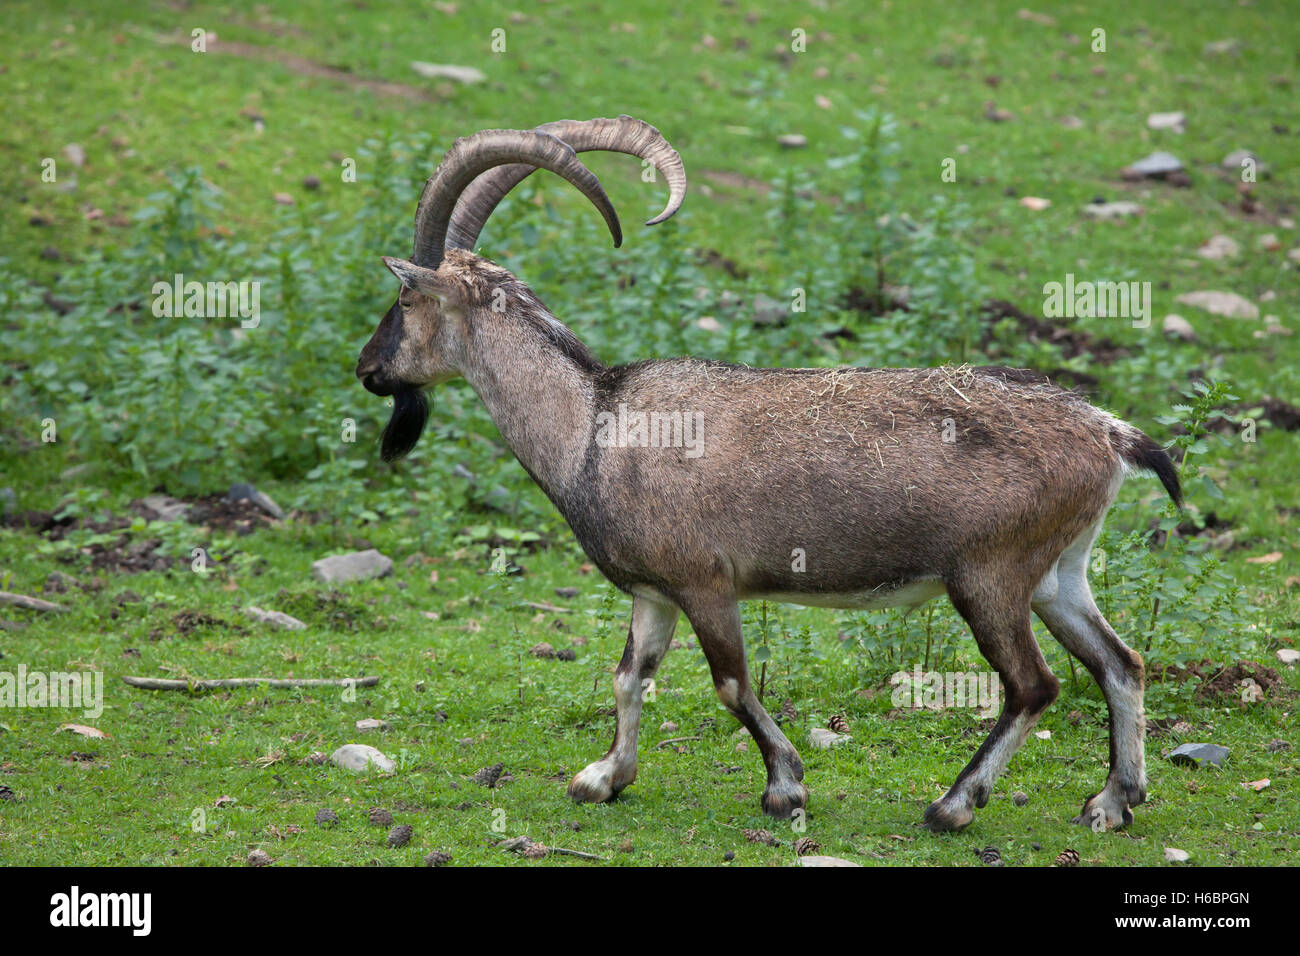 Bezoar ibex (Capra aegagrus aegagrus), also known as the Anatolian Bezoar ibex. Wildlife animal. Stock Photo